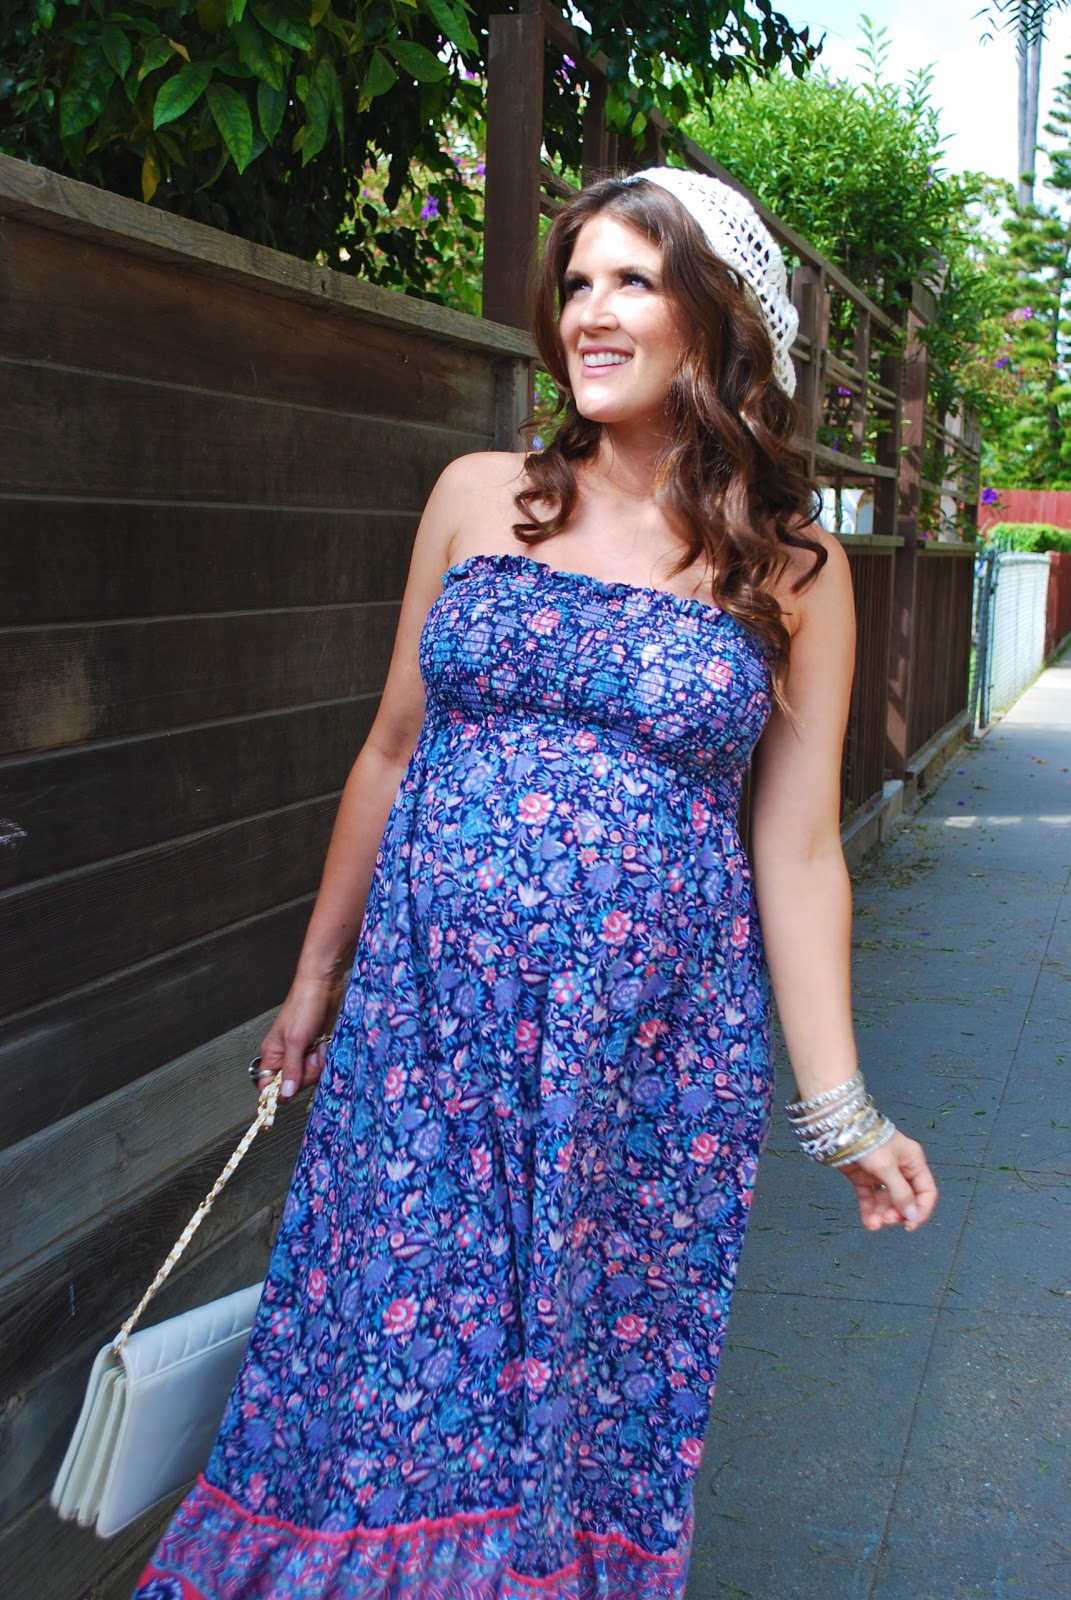 November Grey: Borrowed Boho Summer Dress - Maternity Style - 31 weeks!